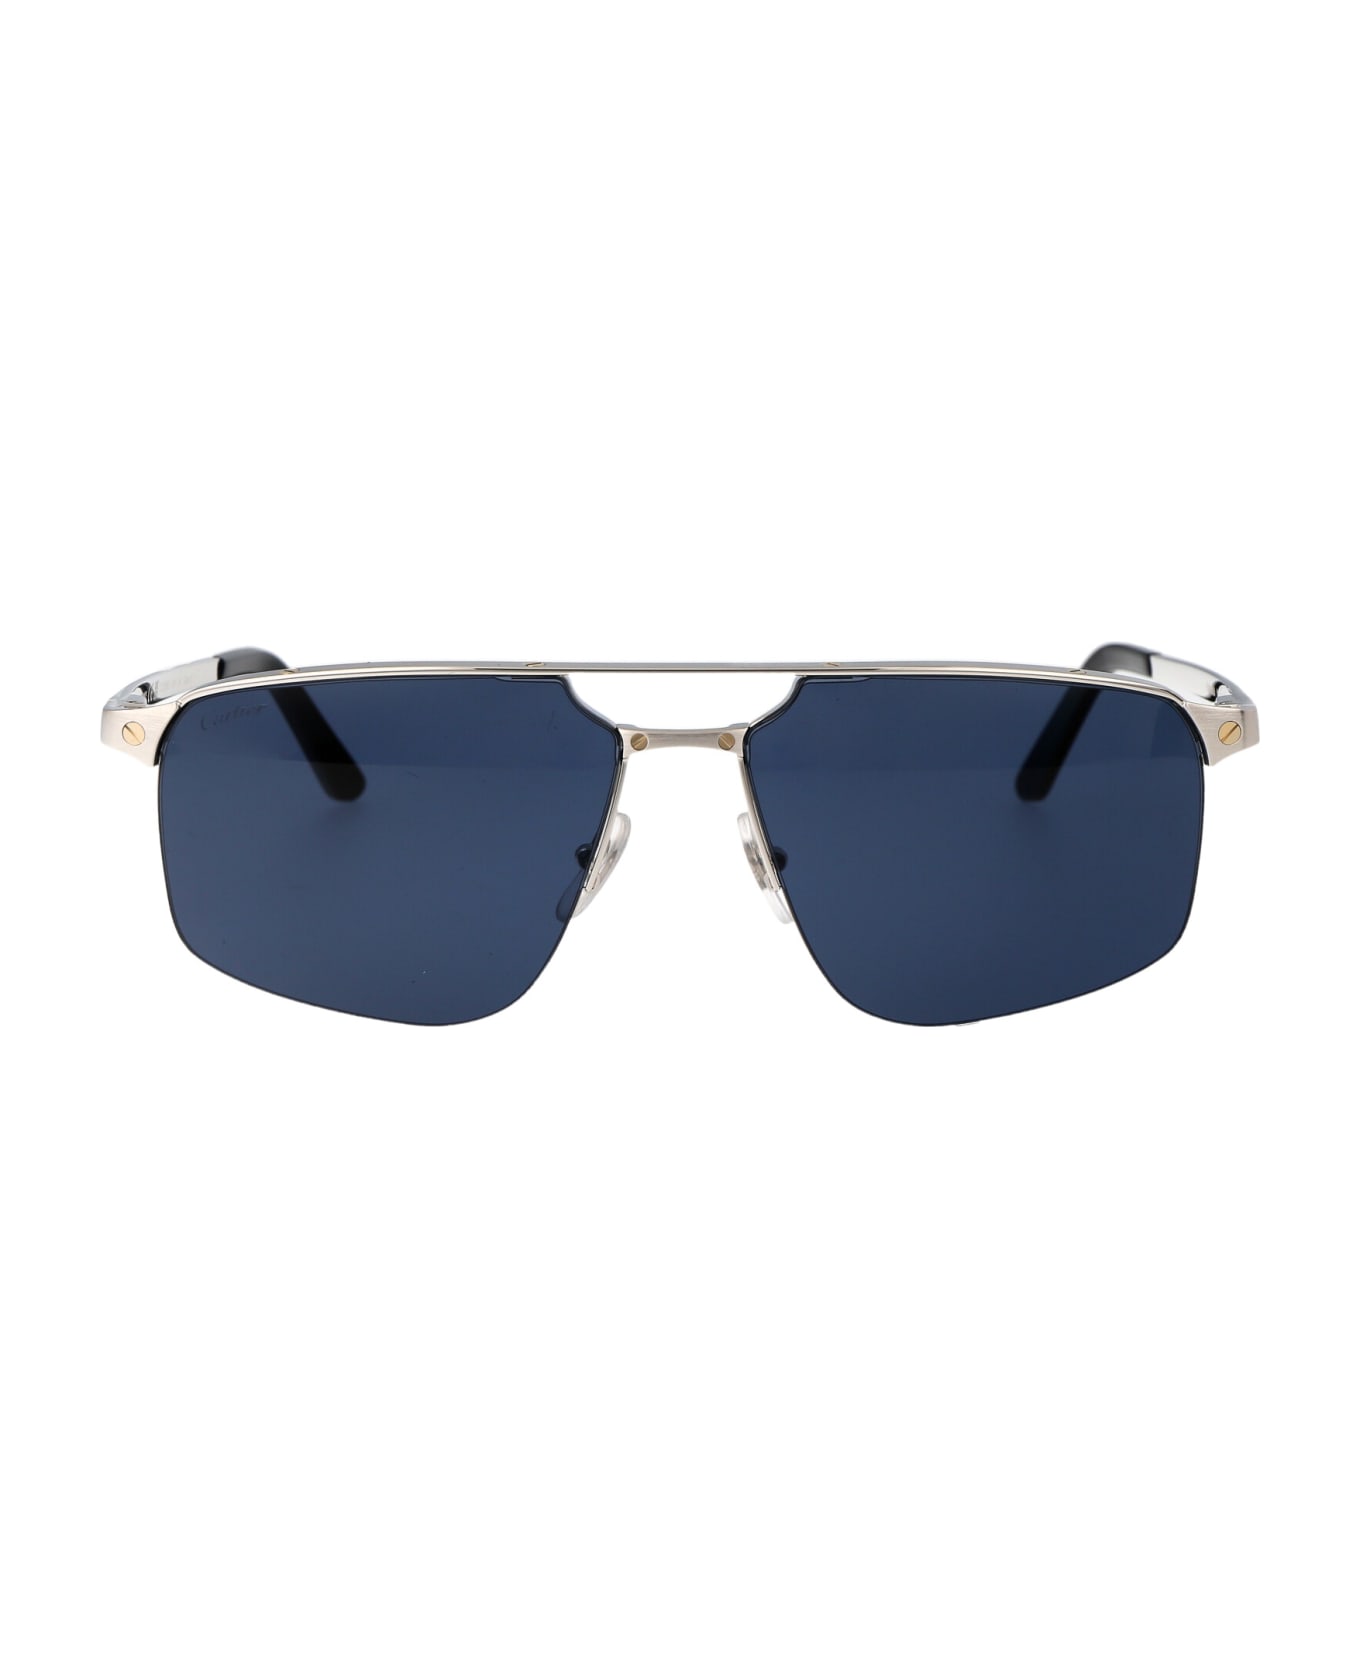 Cartier Eyewear Ct0385s Sunglasses - 004 SILVER SILVER BLUE